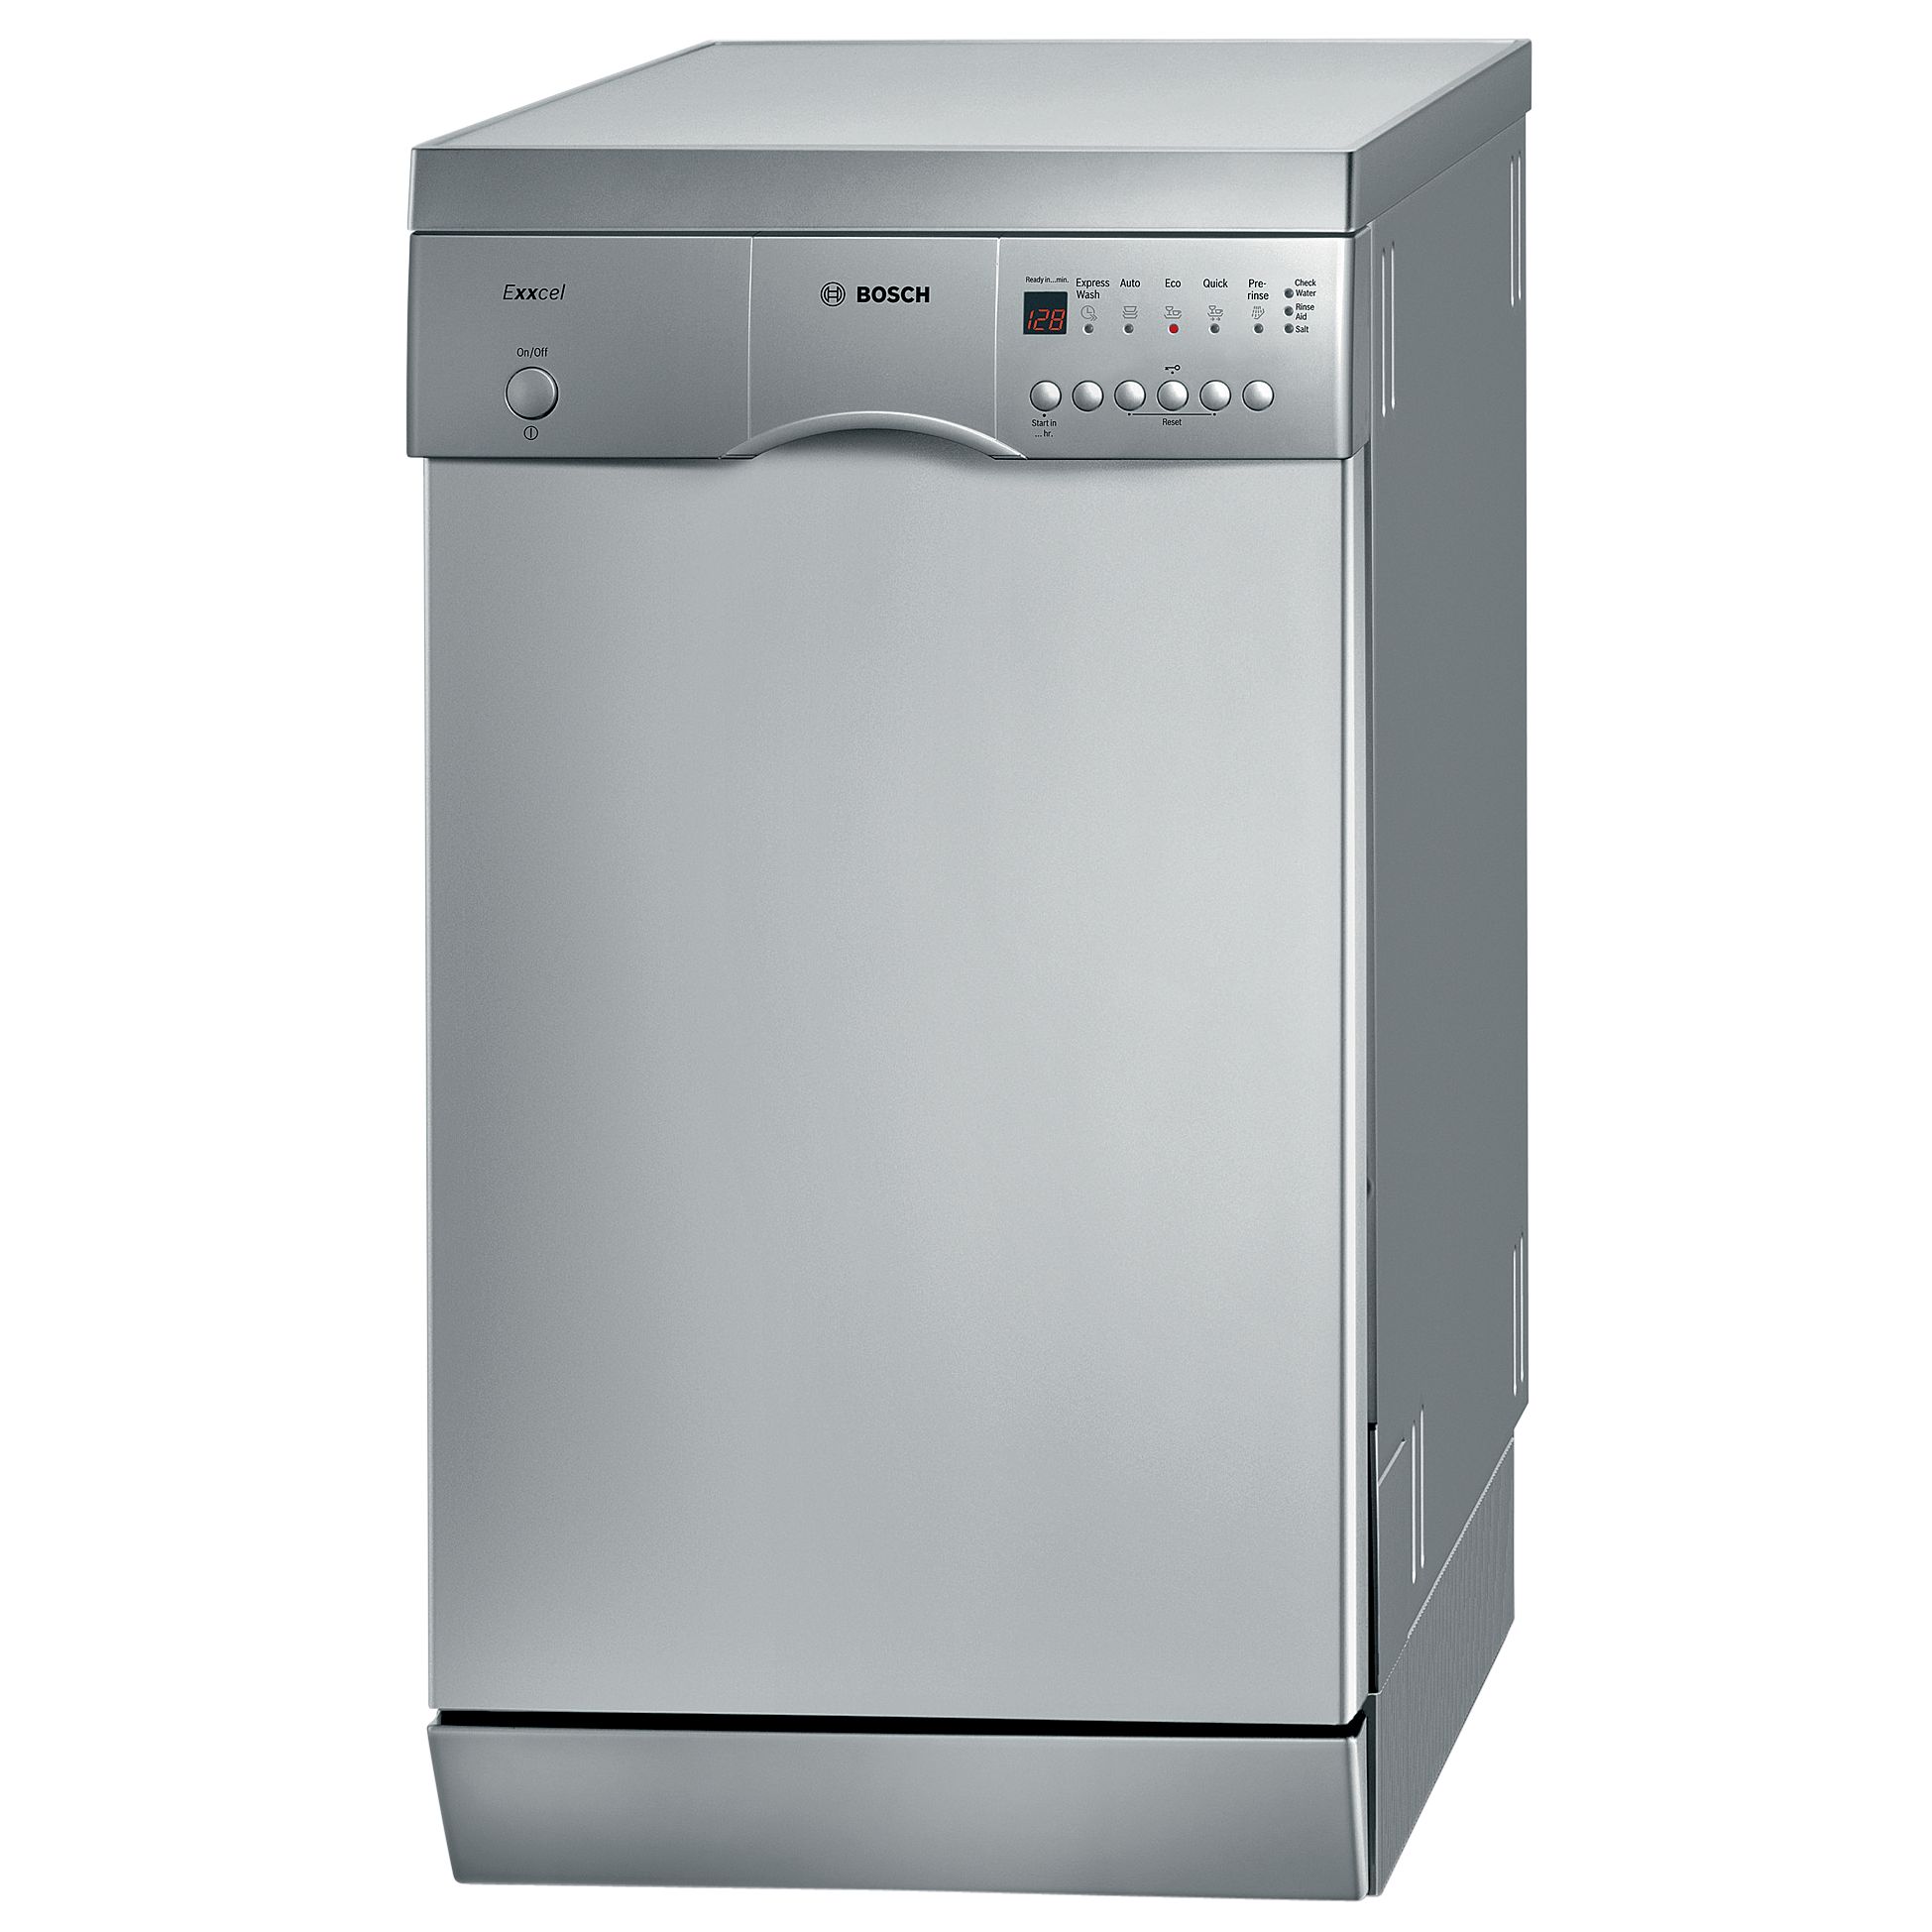 Bosch Exxcel SRS45E48GB Slimline Dishwasher, Silver at John Lewis